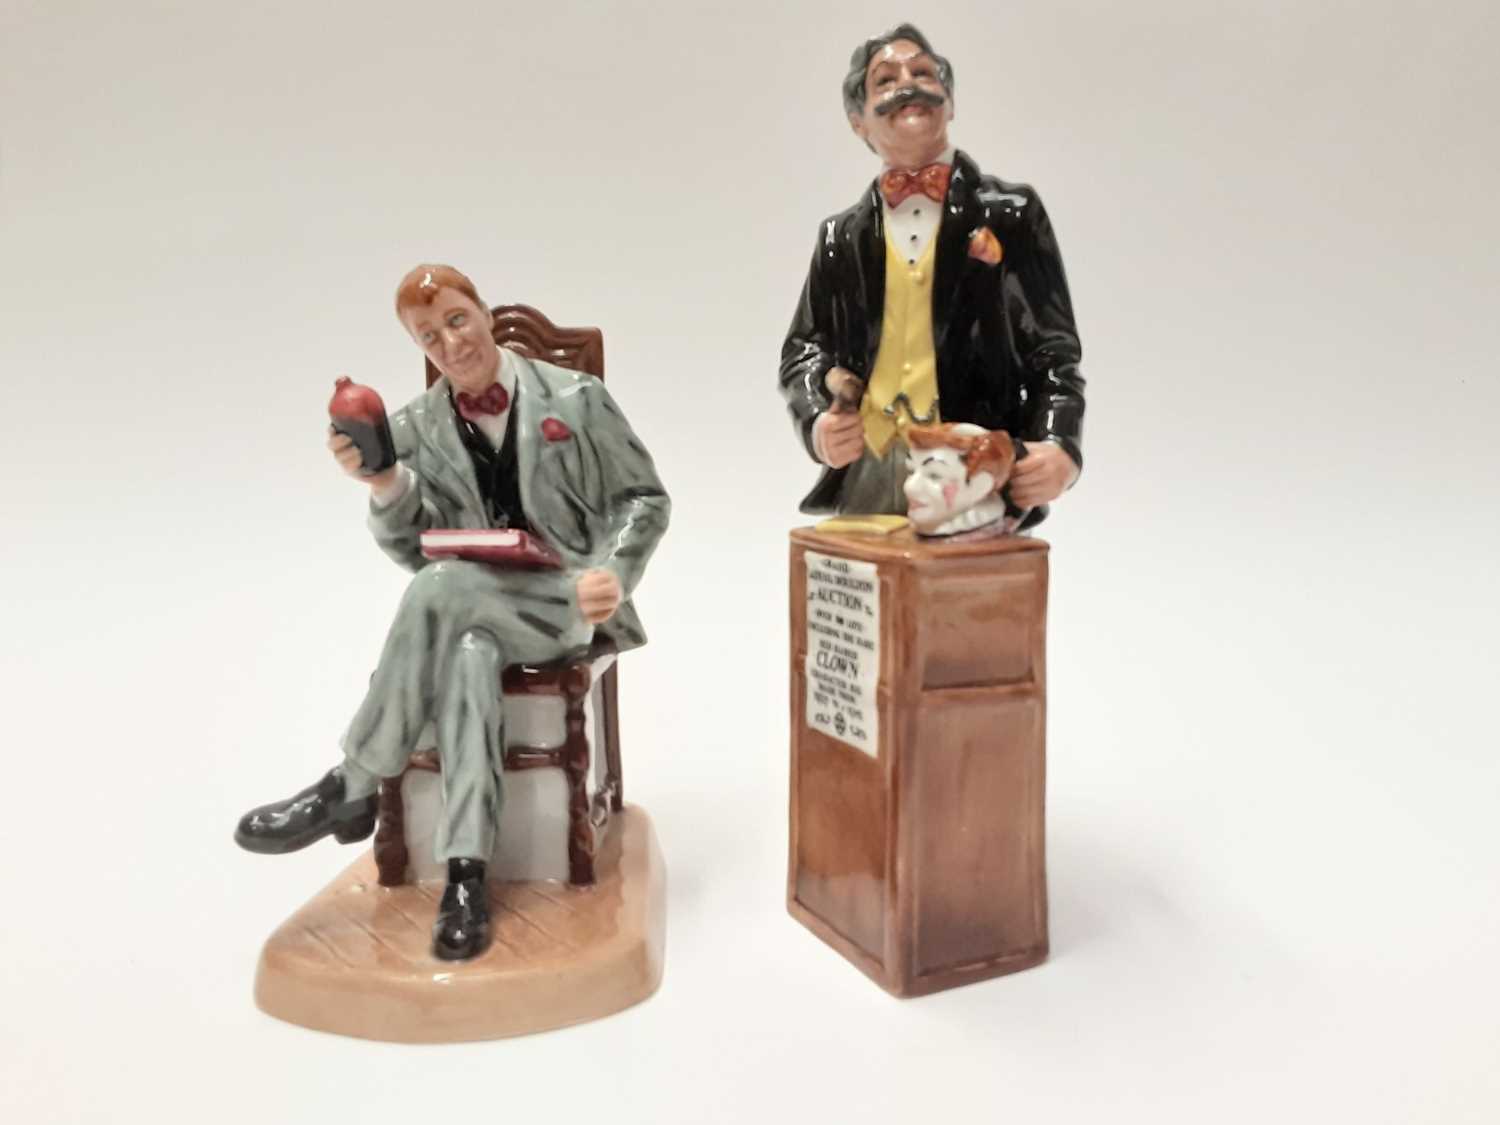 Lot 40 - Two Royal Doulton figures - Antique Dealer HN4424 and Auctioneer HN2988